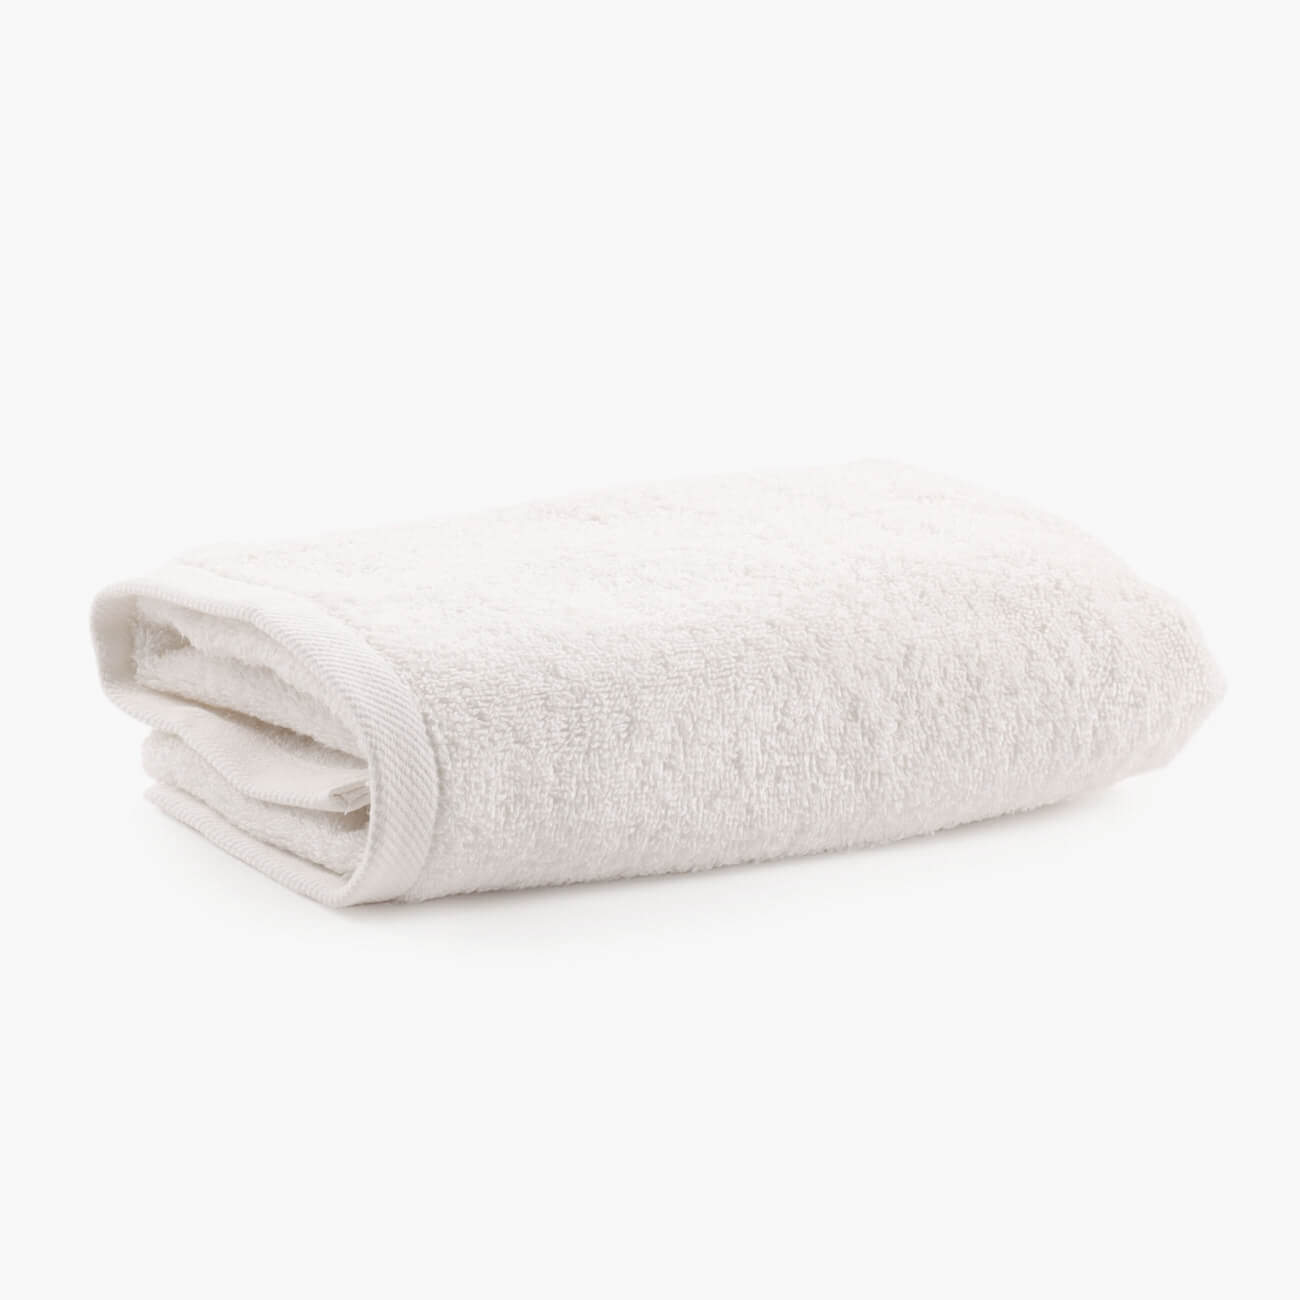 Полотенце, 50х90 см, хлопок, молочное, Wellness натуральное бумажное полотенце tork